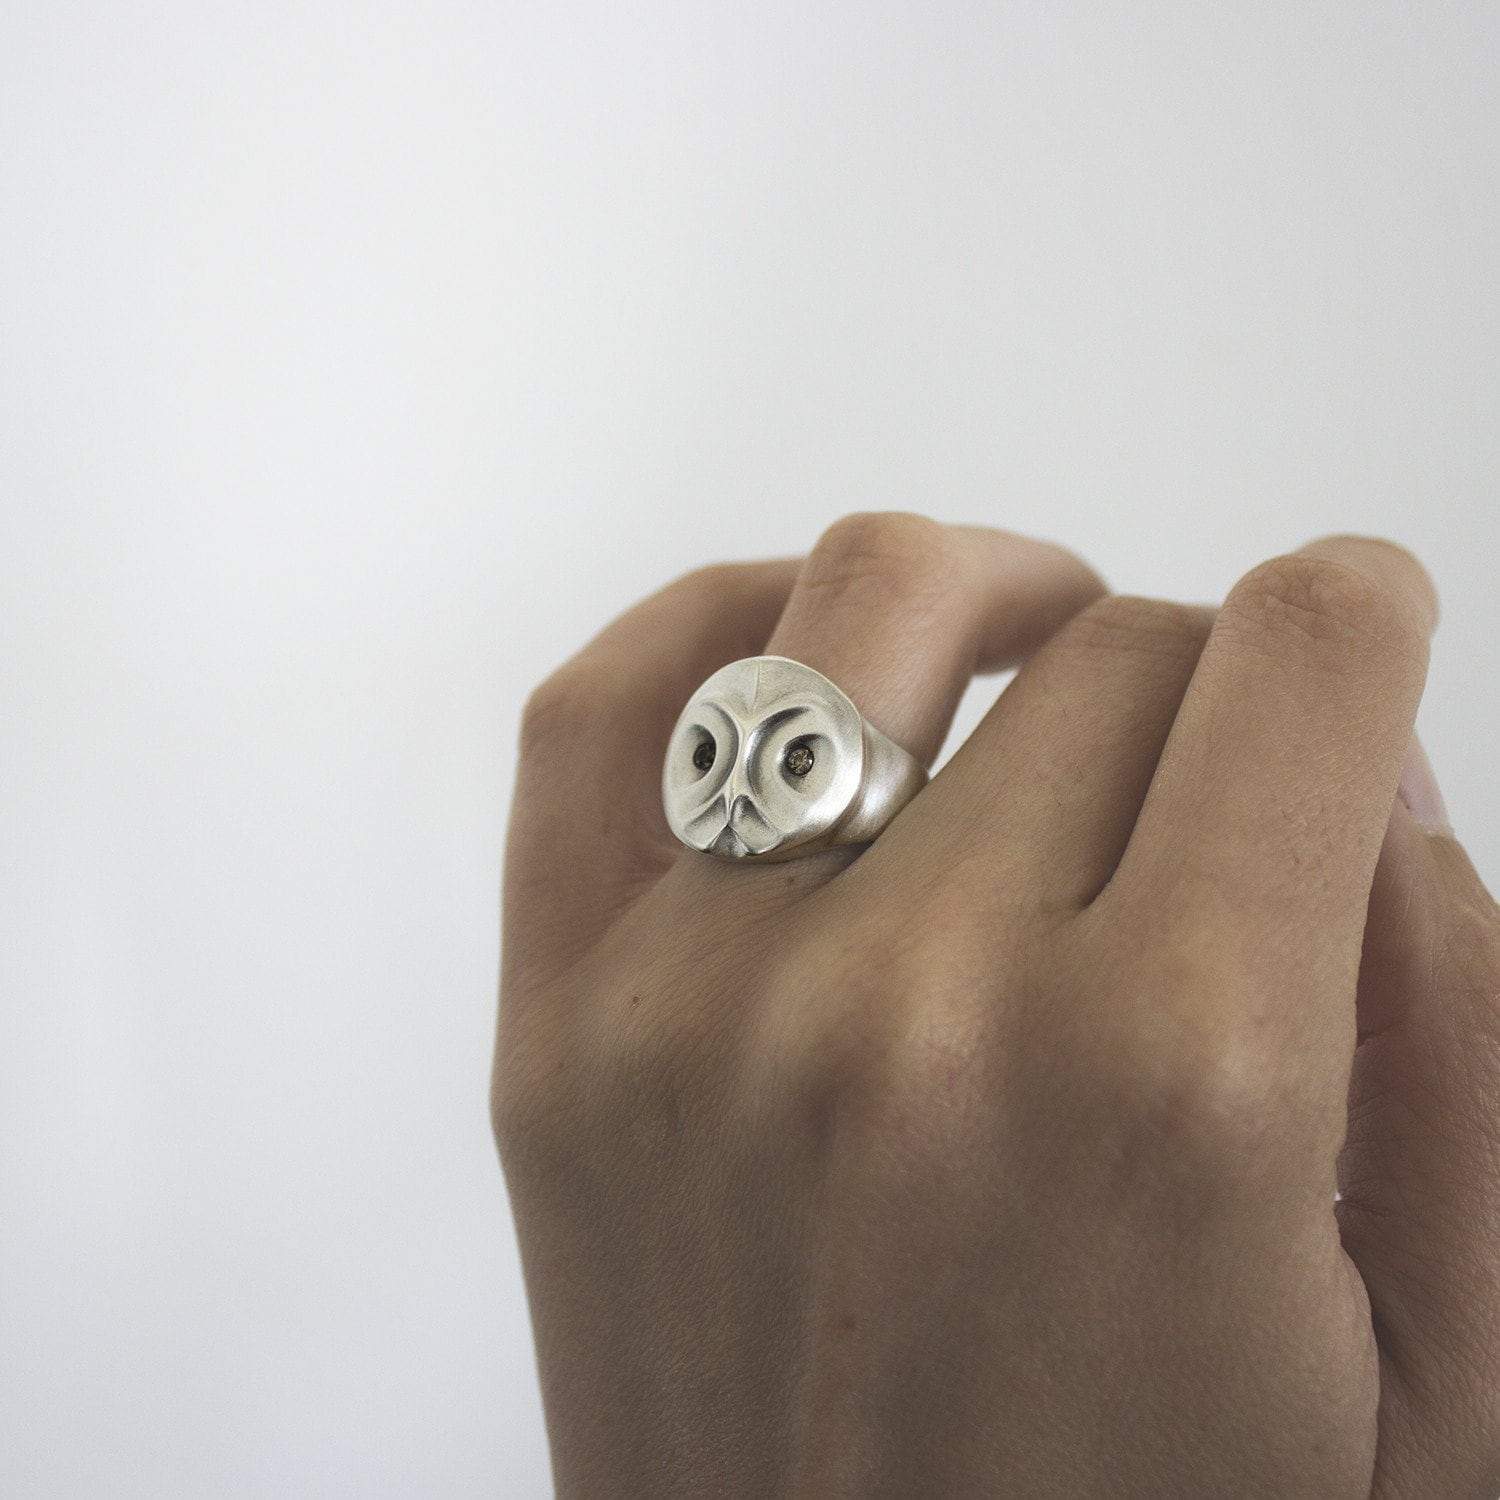 ELINA GLEIZER Jewelry Great Grey Owl Ring With Emerald Eyes